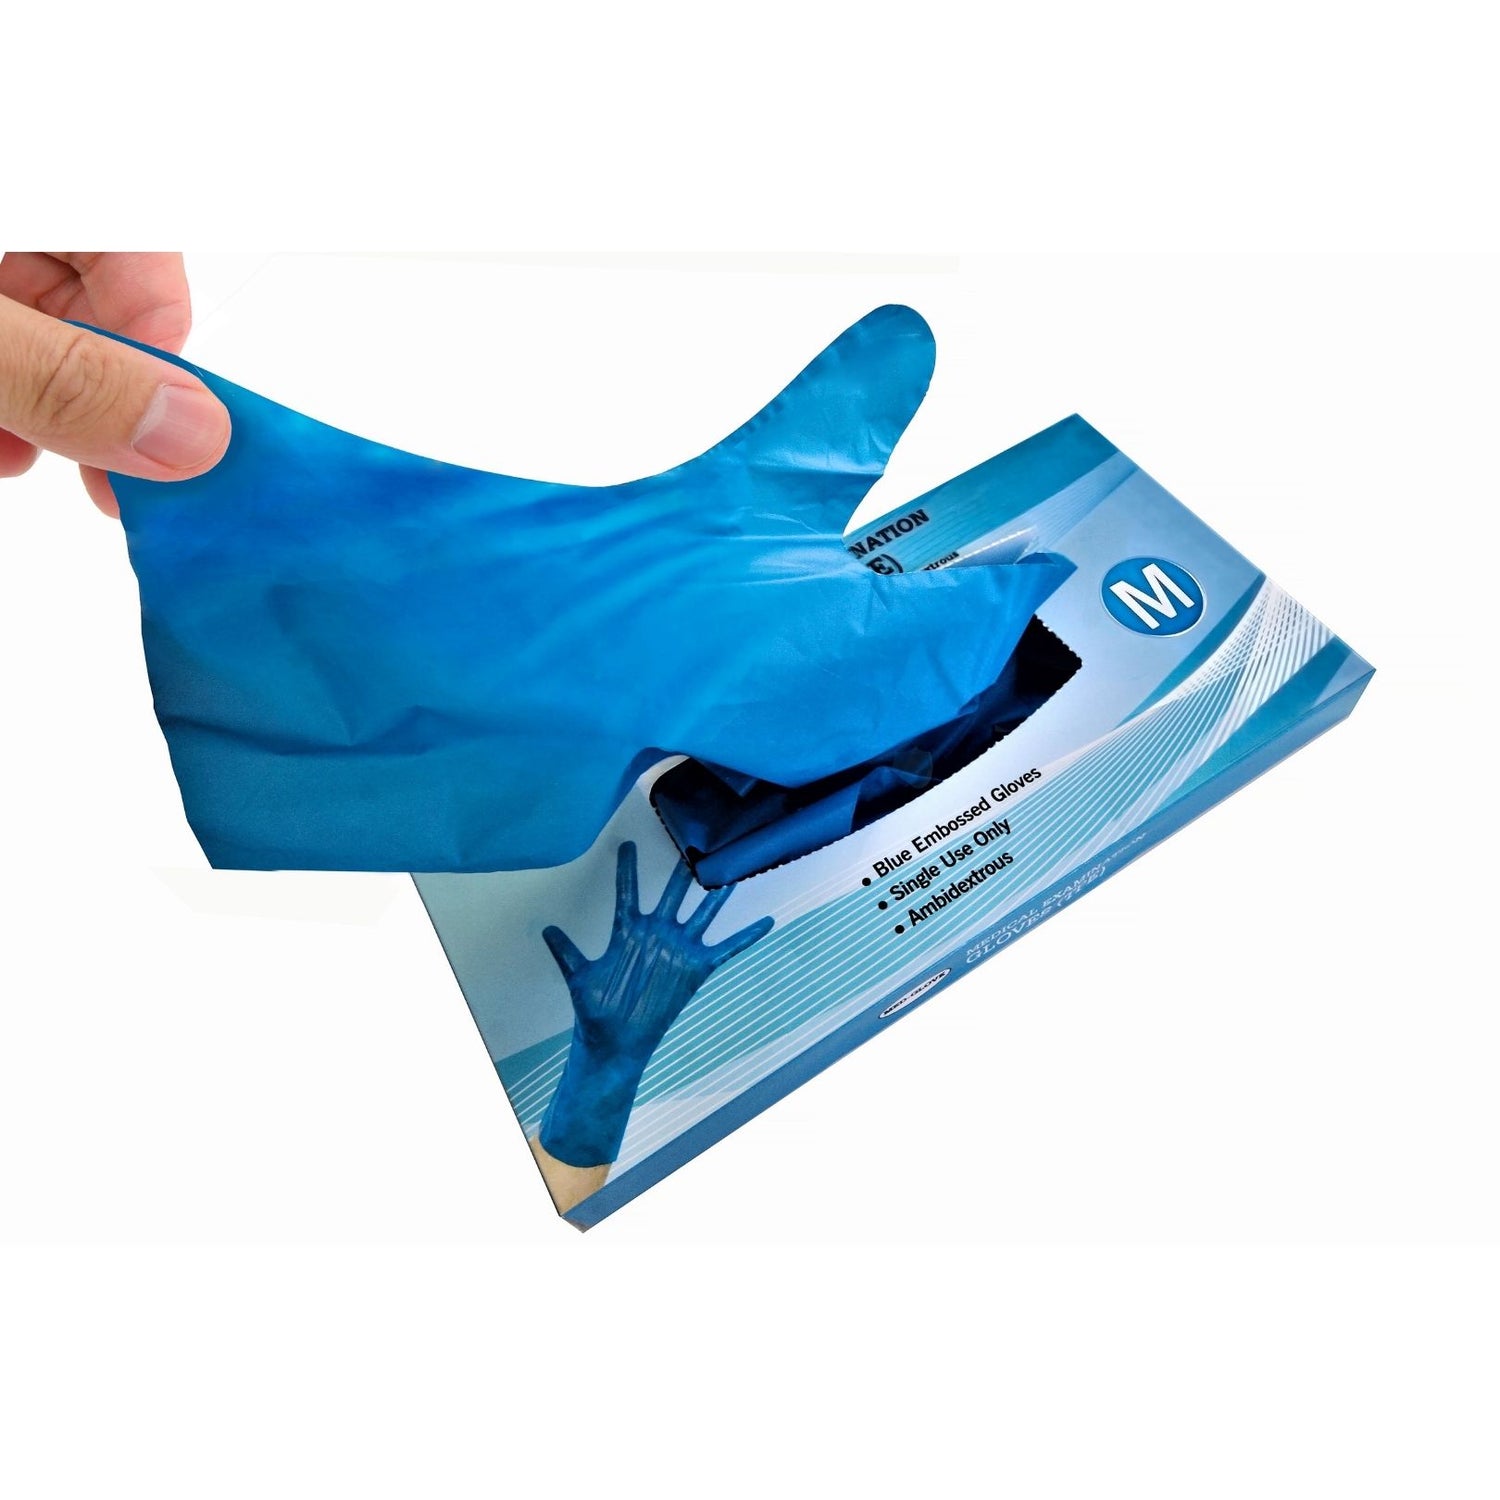 "Med-Glove" 30 Boxes TPE (Thermo Plastic Elastomer Gloves) - Medical Examination Gloves $55.99/Case (3000Pcs/Case) - USA Medical Supply